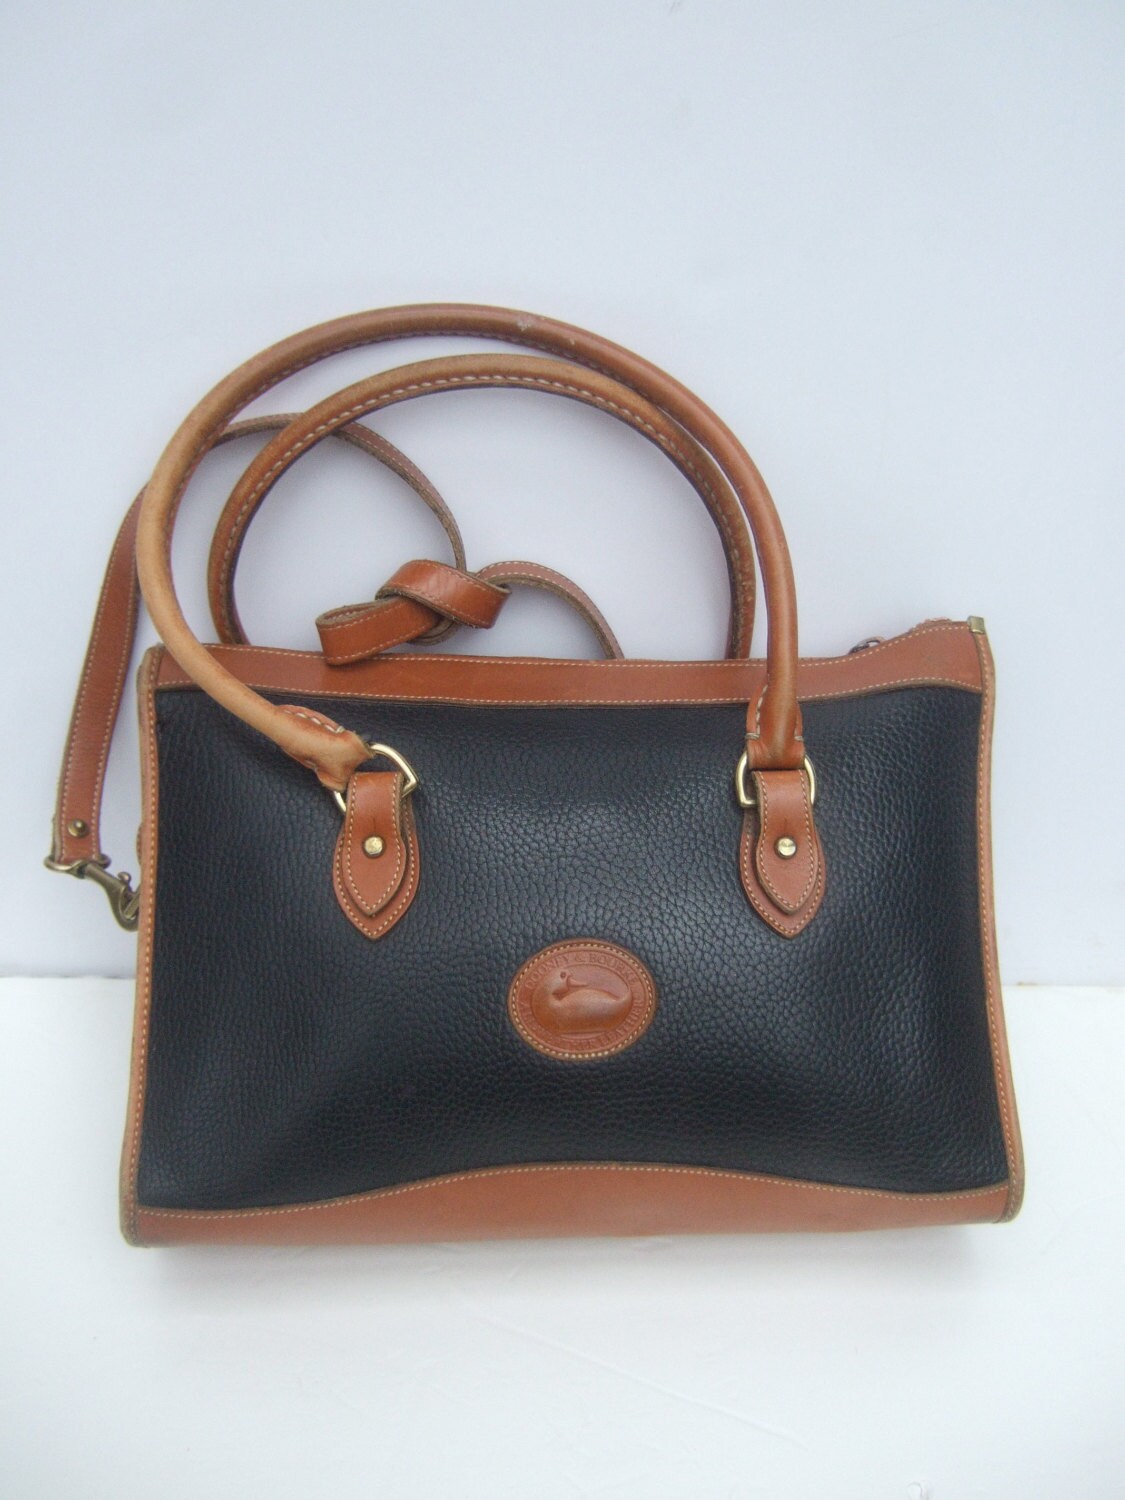 Dooney & Bourke Black Pebble Leather Handbag Genuine